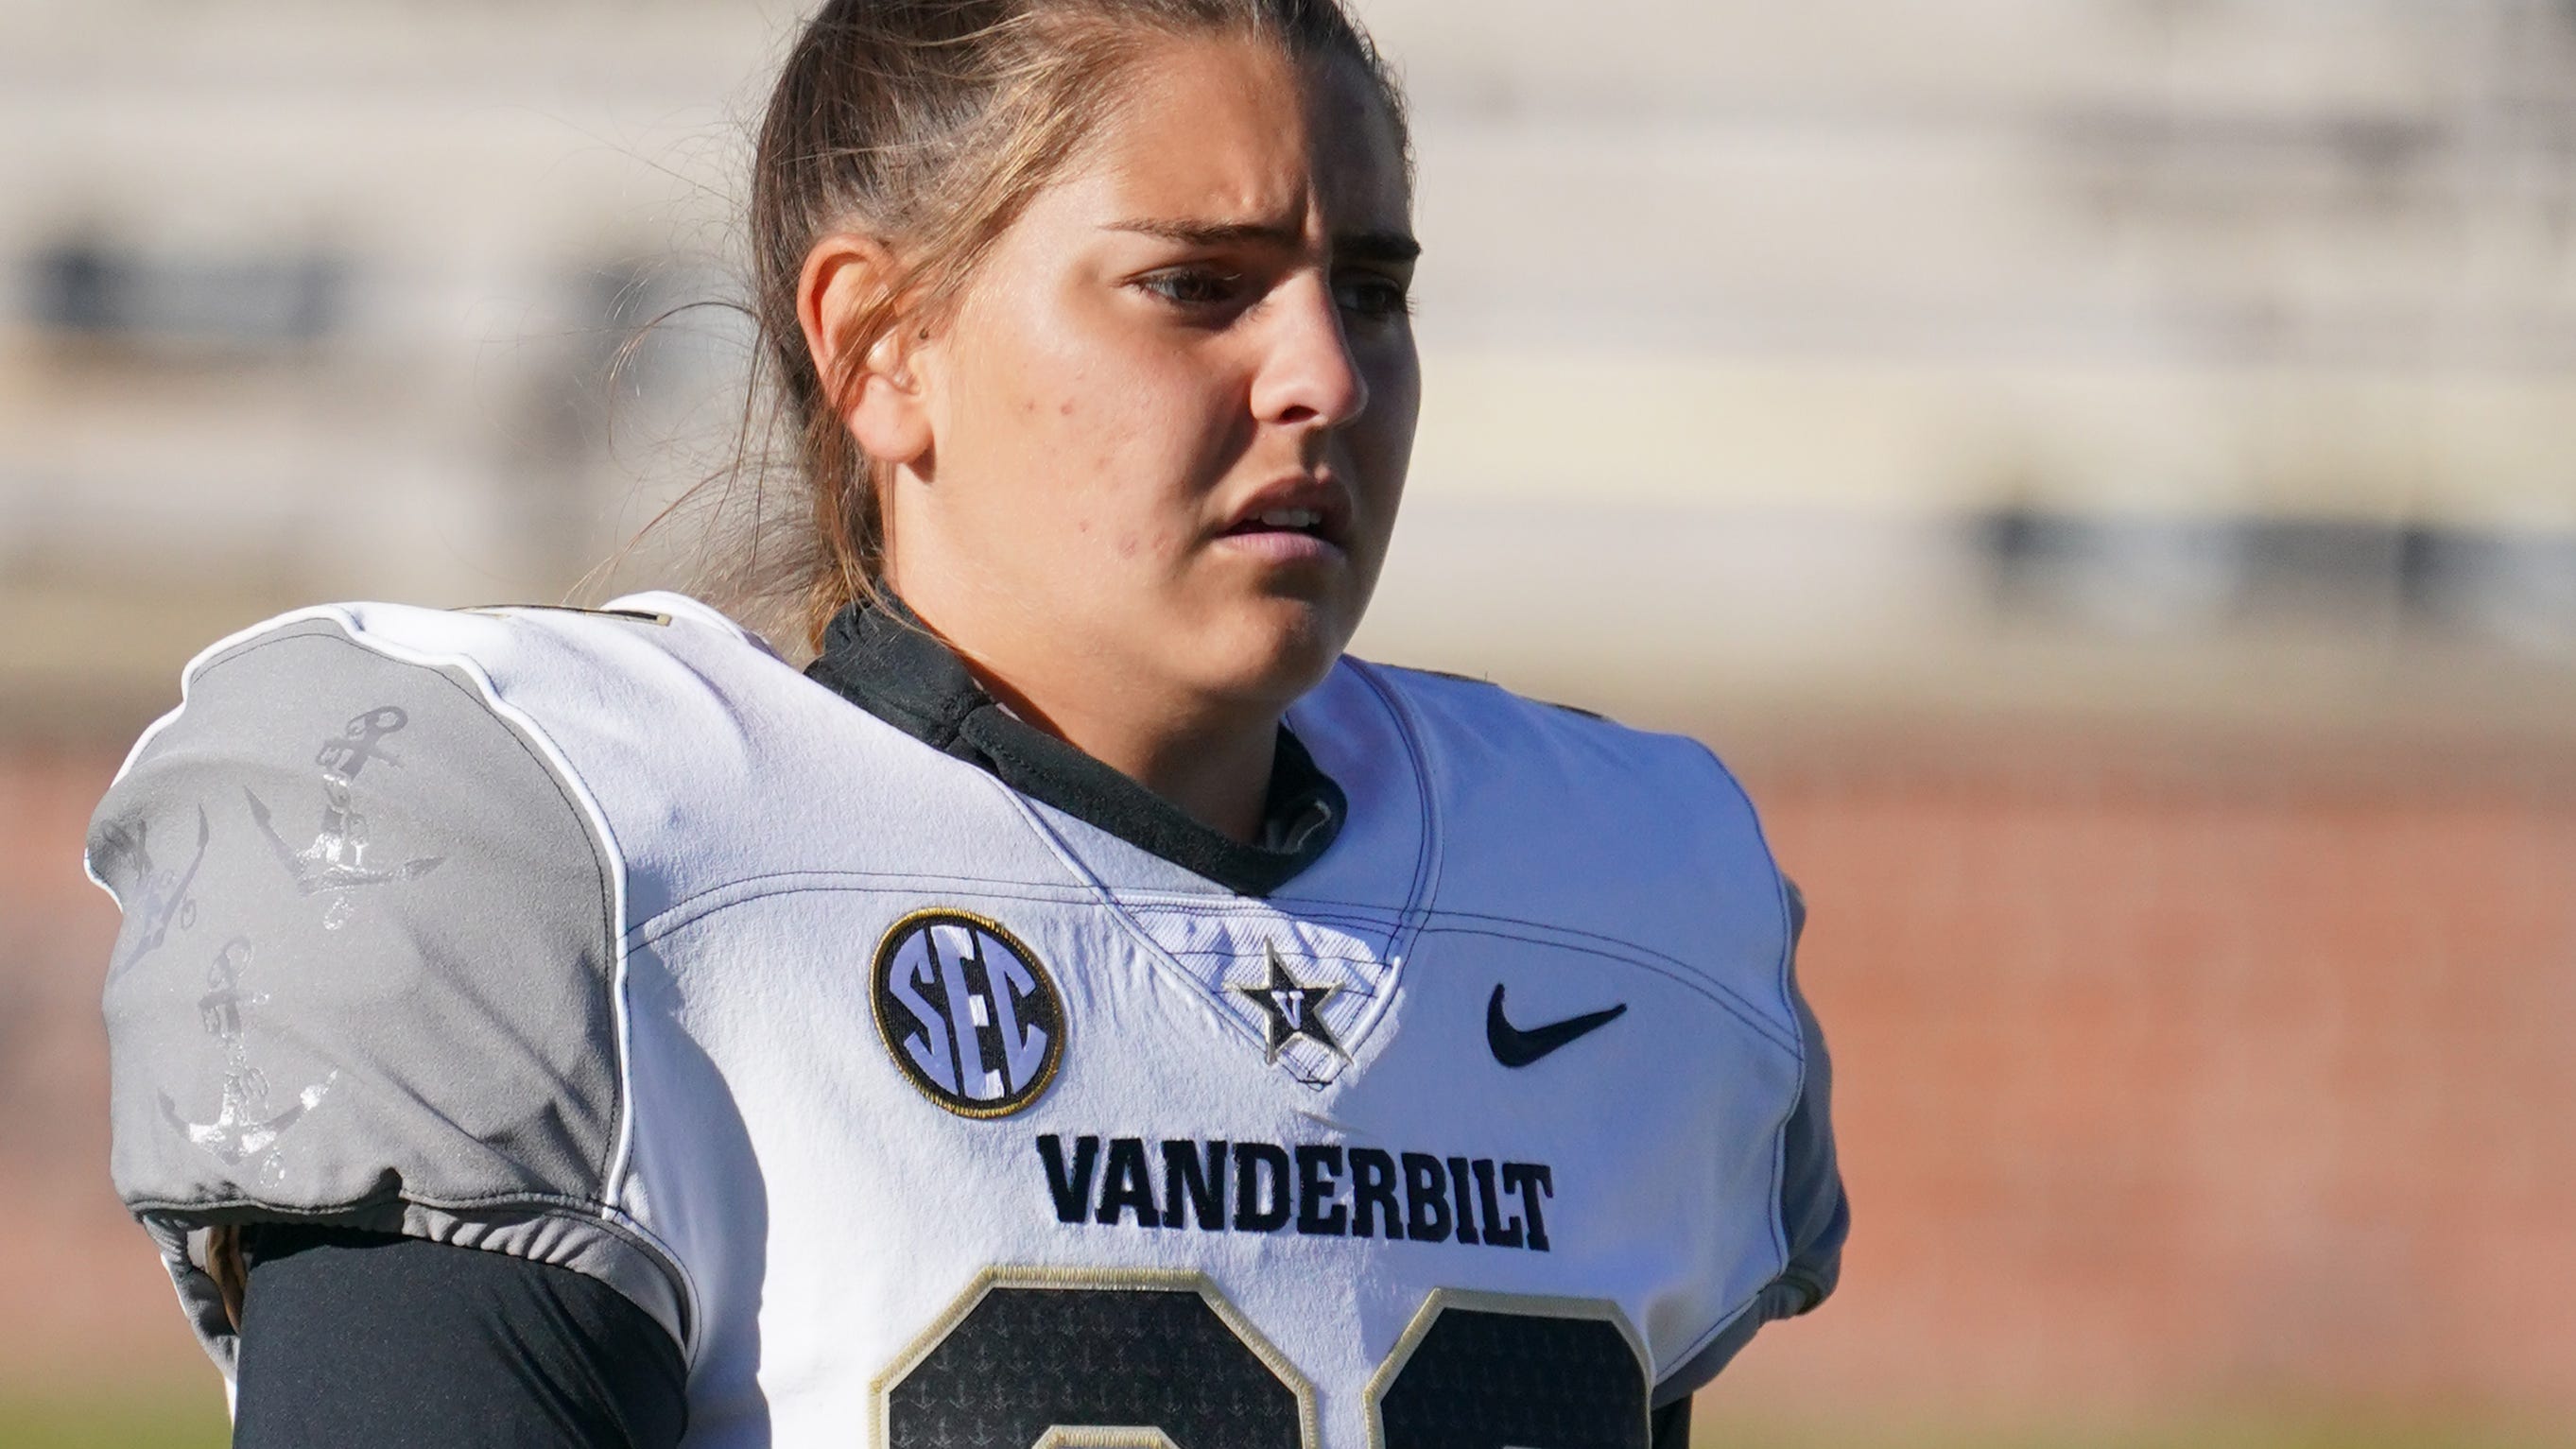 Vanderbilt kicker Sarah Fuller, listed as lone kicker on depth chart, prepared to play against Georgia - USA TODAY